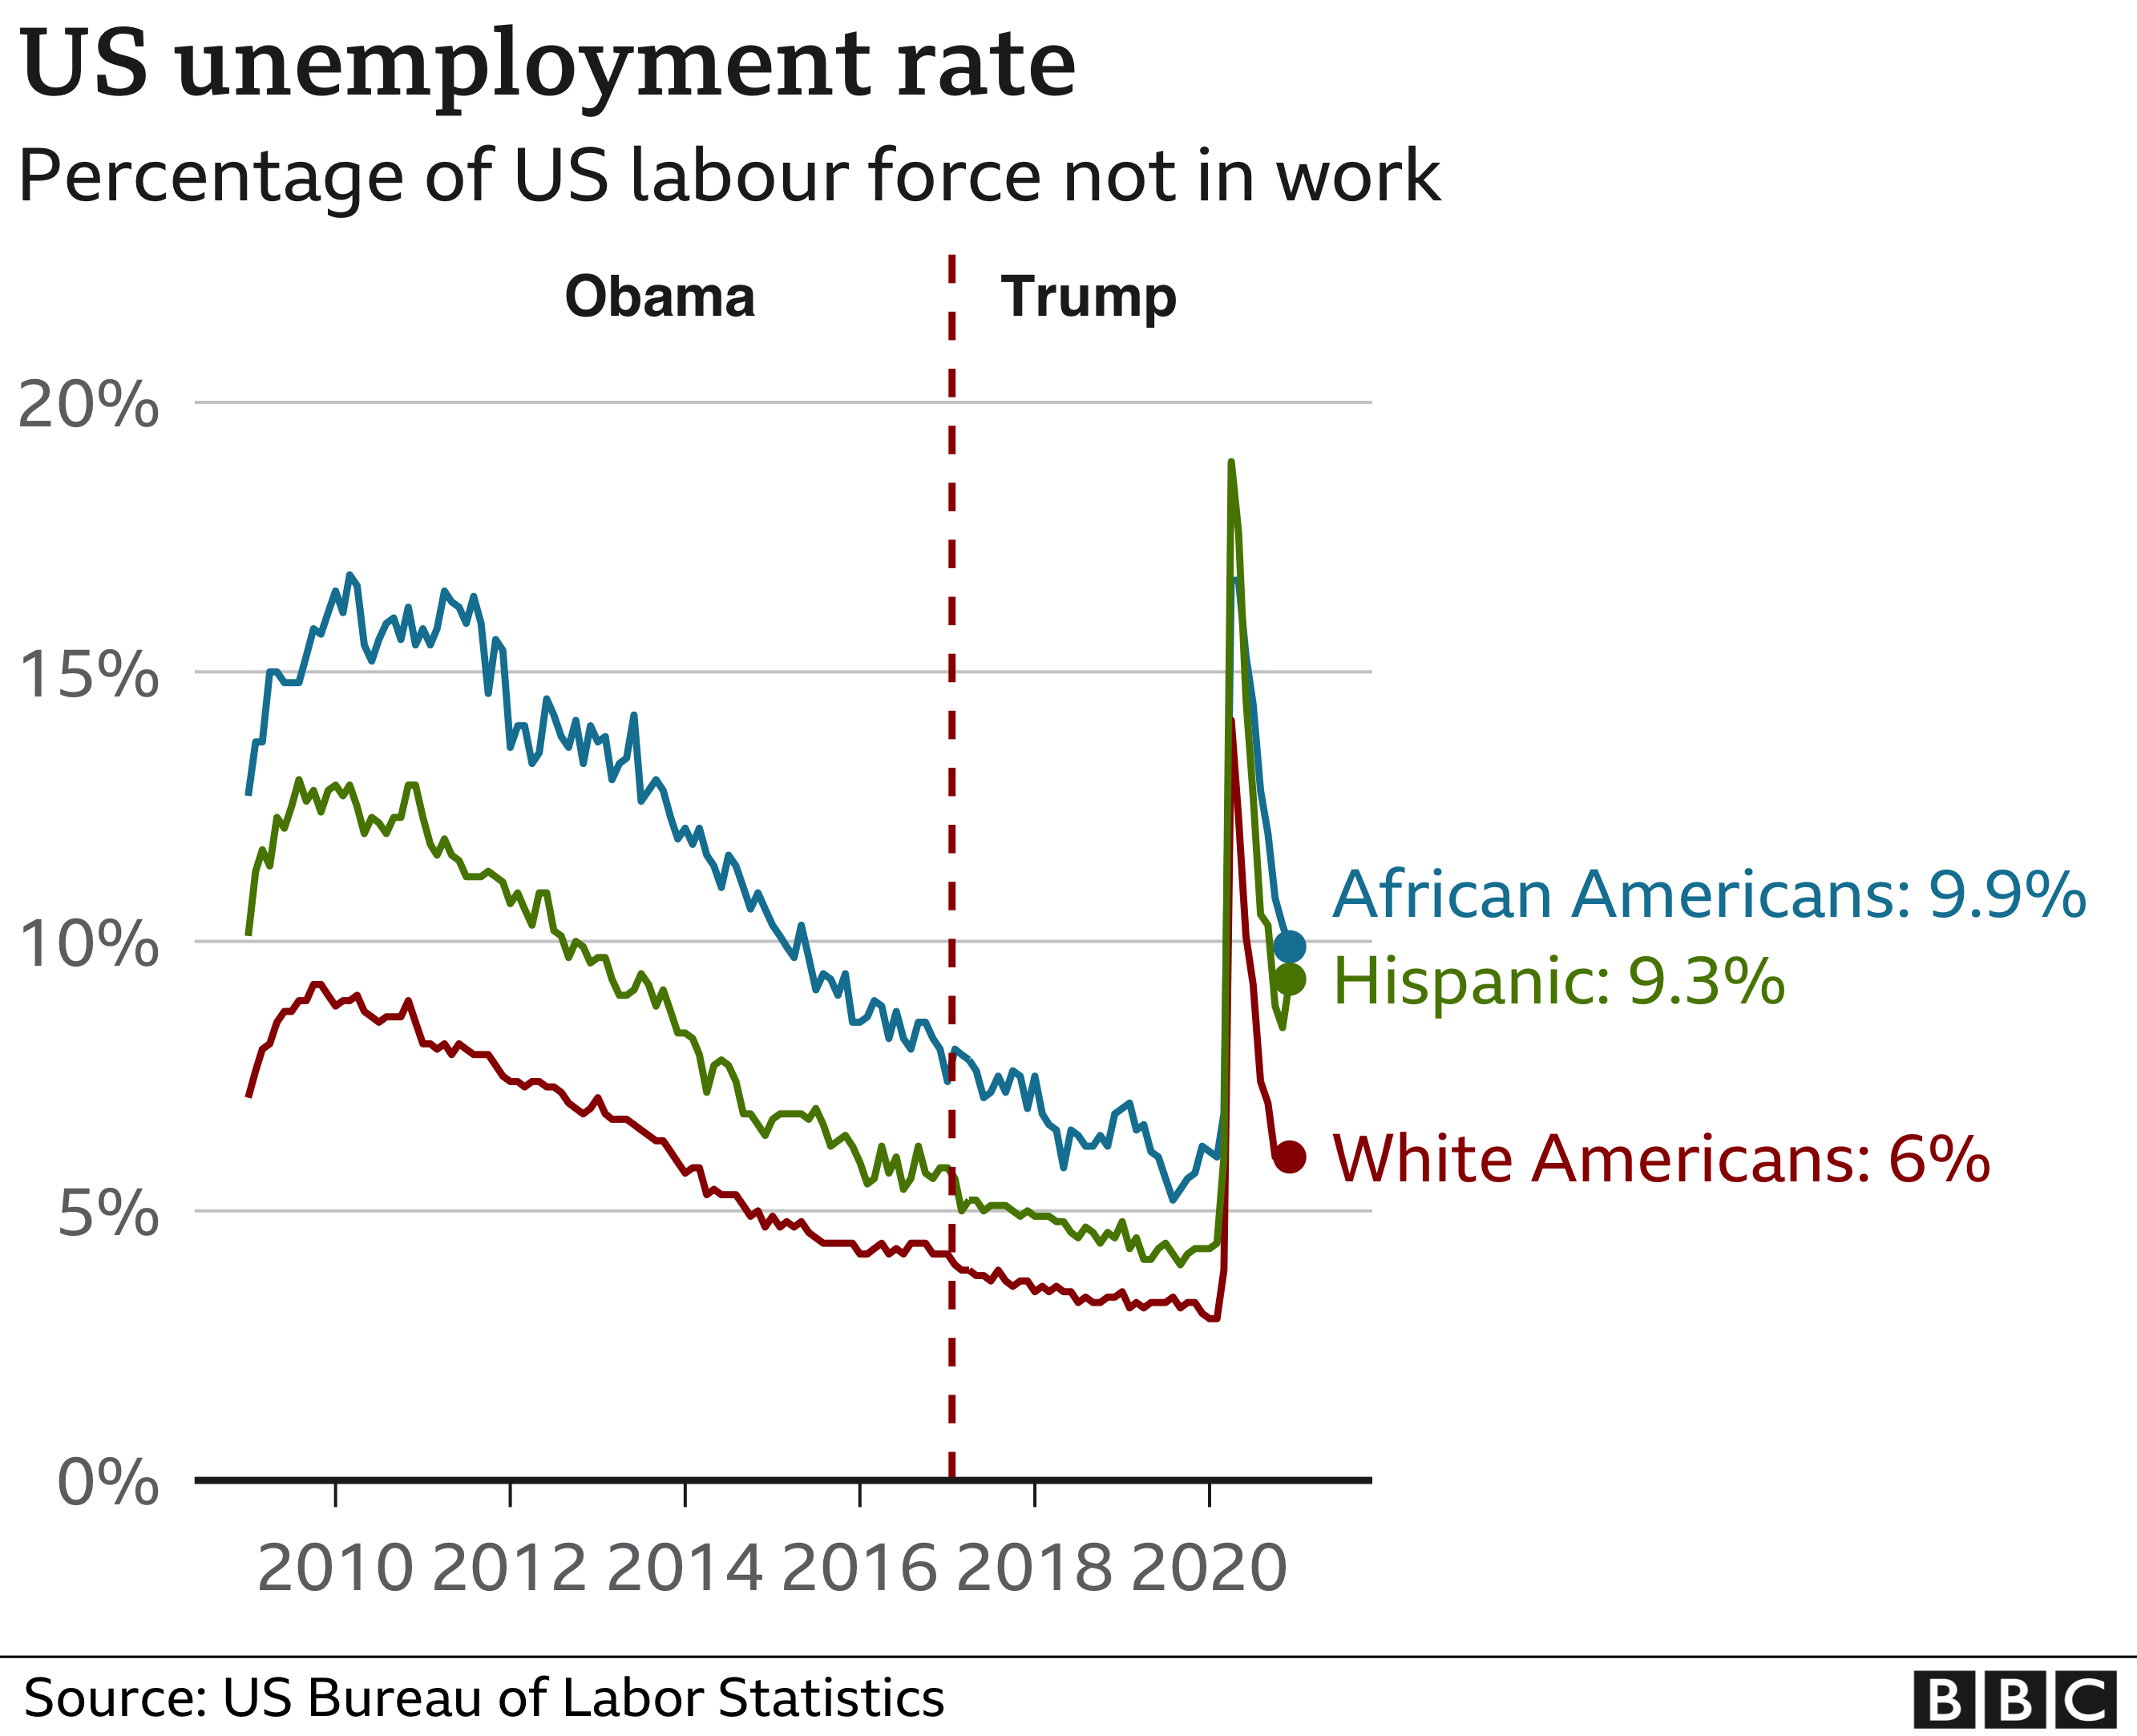 _116596266_obamatrumpus.unemployment-blackwhite-nc.png